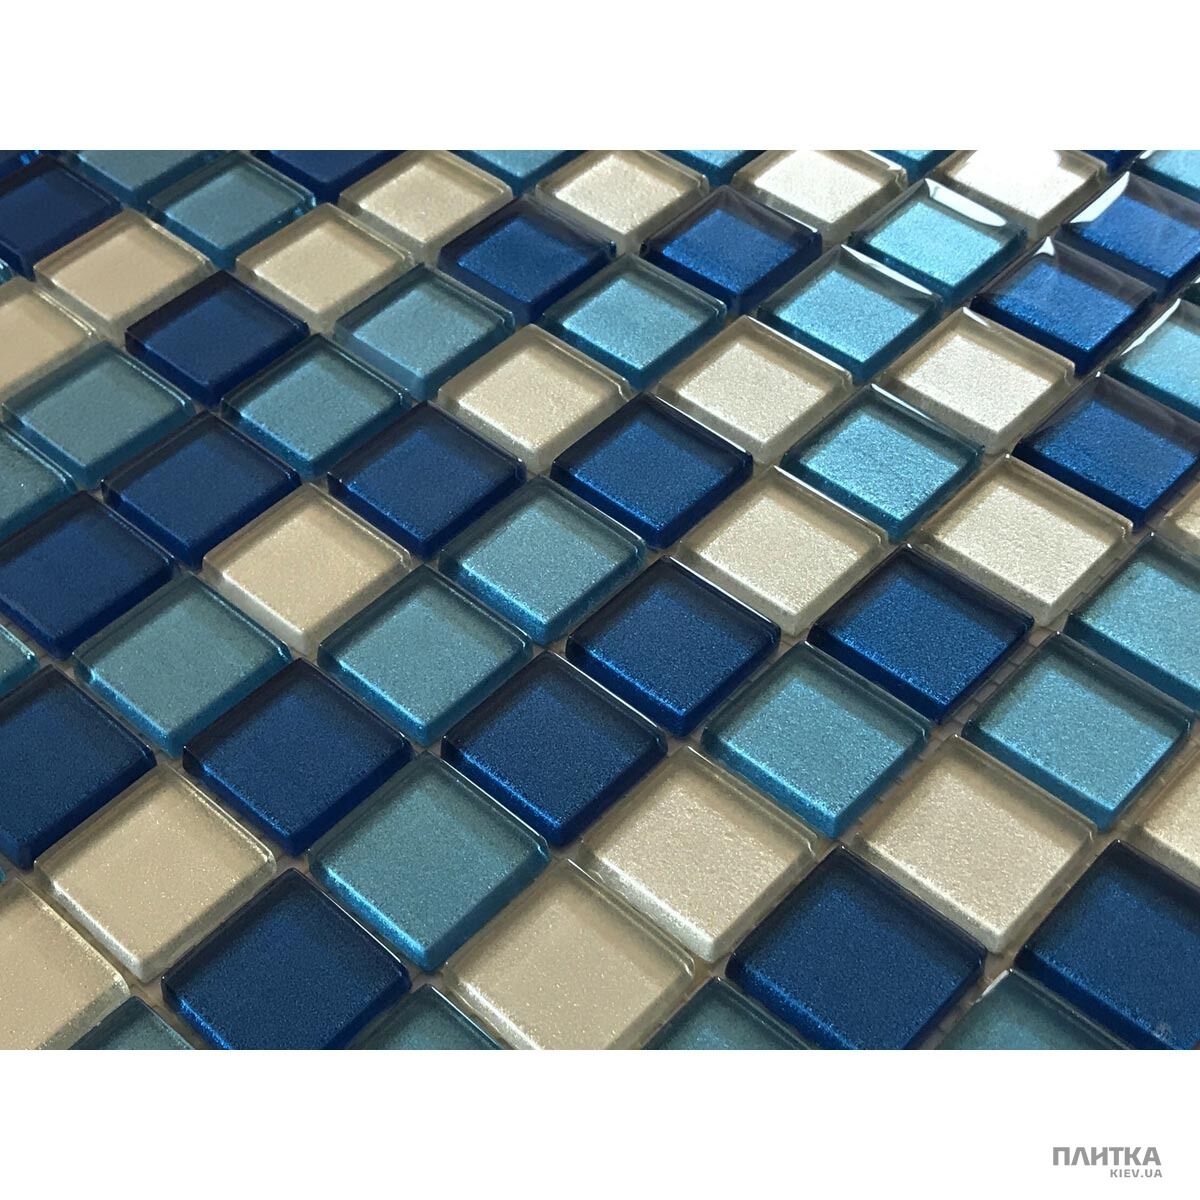 Мозаика Керамика Полесье GLANCE BLUE MIX голубой,серый,синий